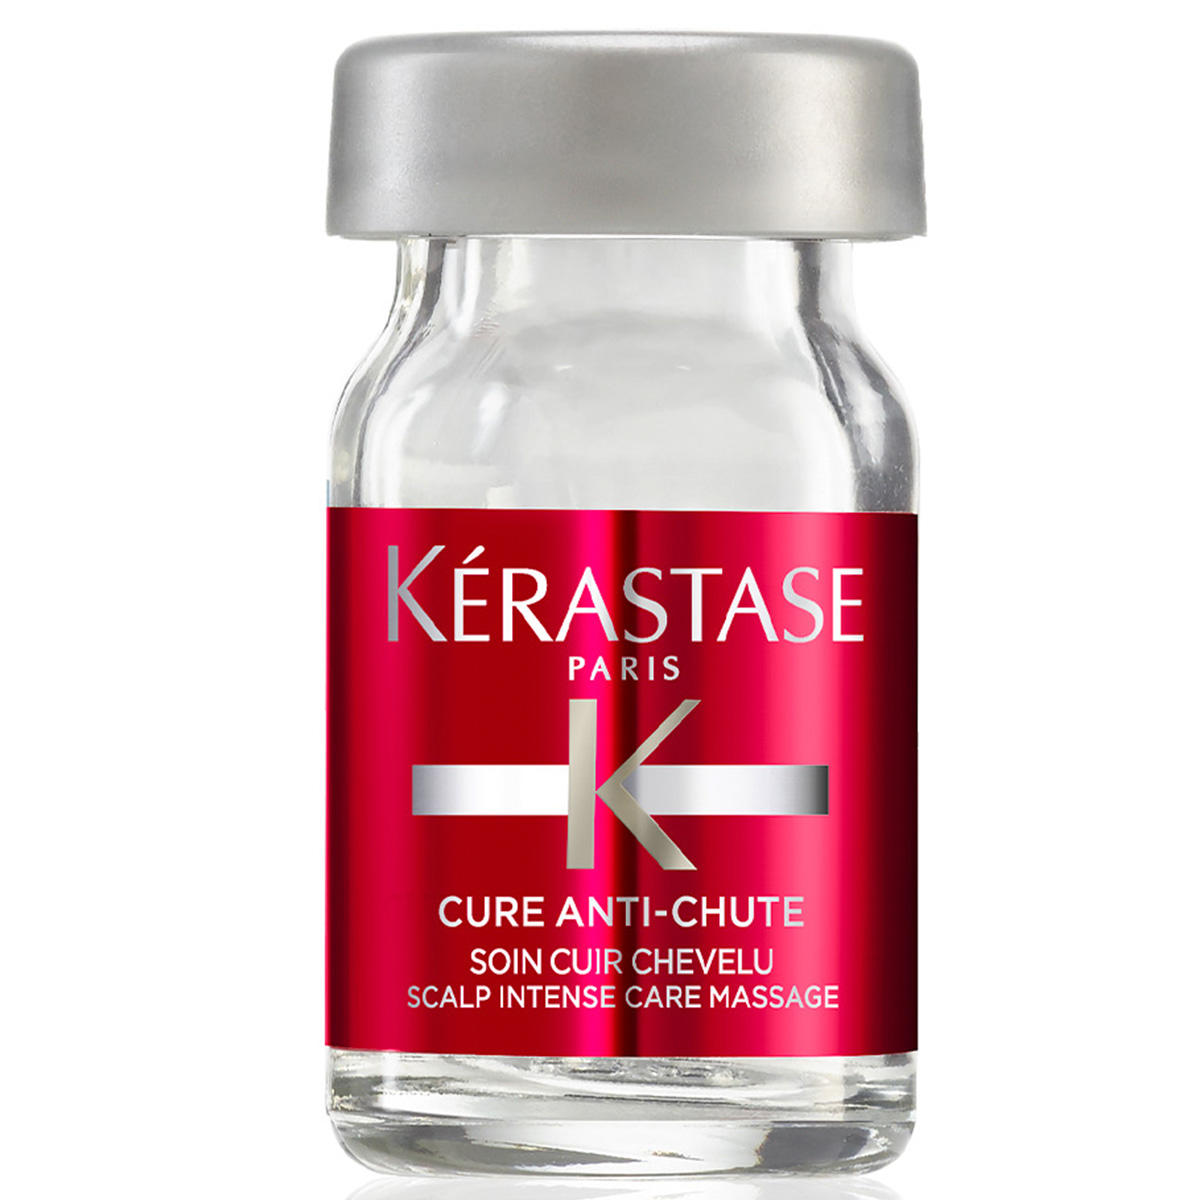 Kérastase Spécifique Cure Anti-Chute Verpakking met 42 x 6 ml - 1